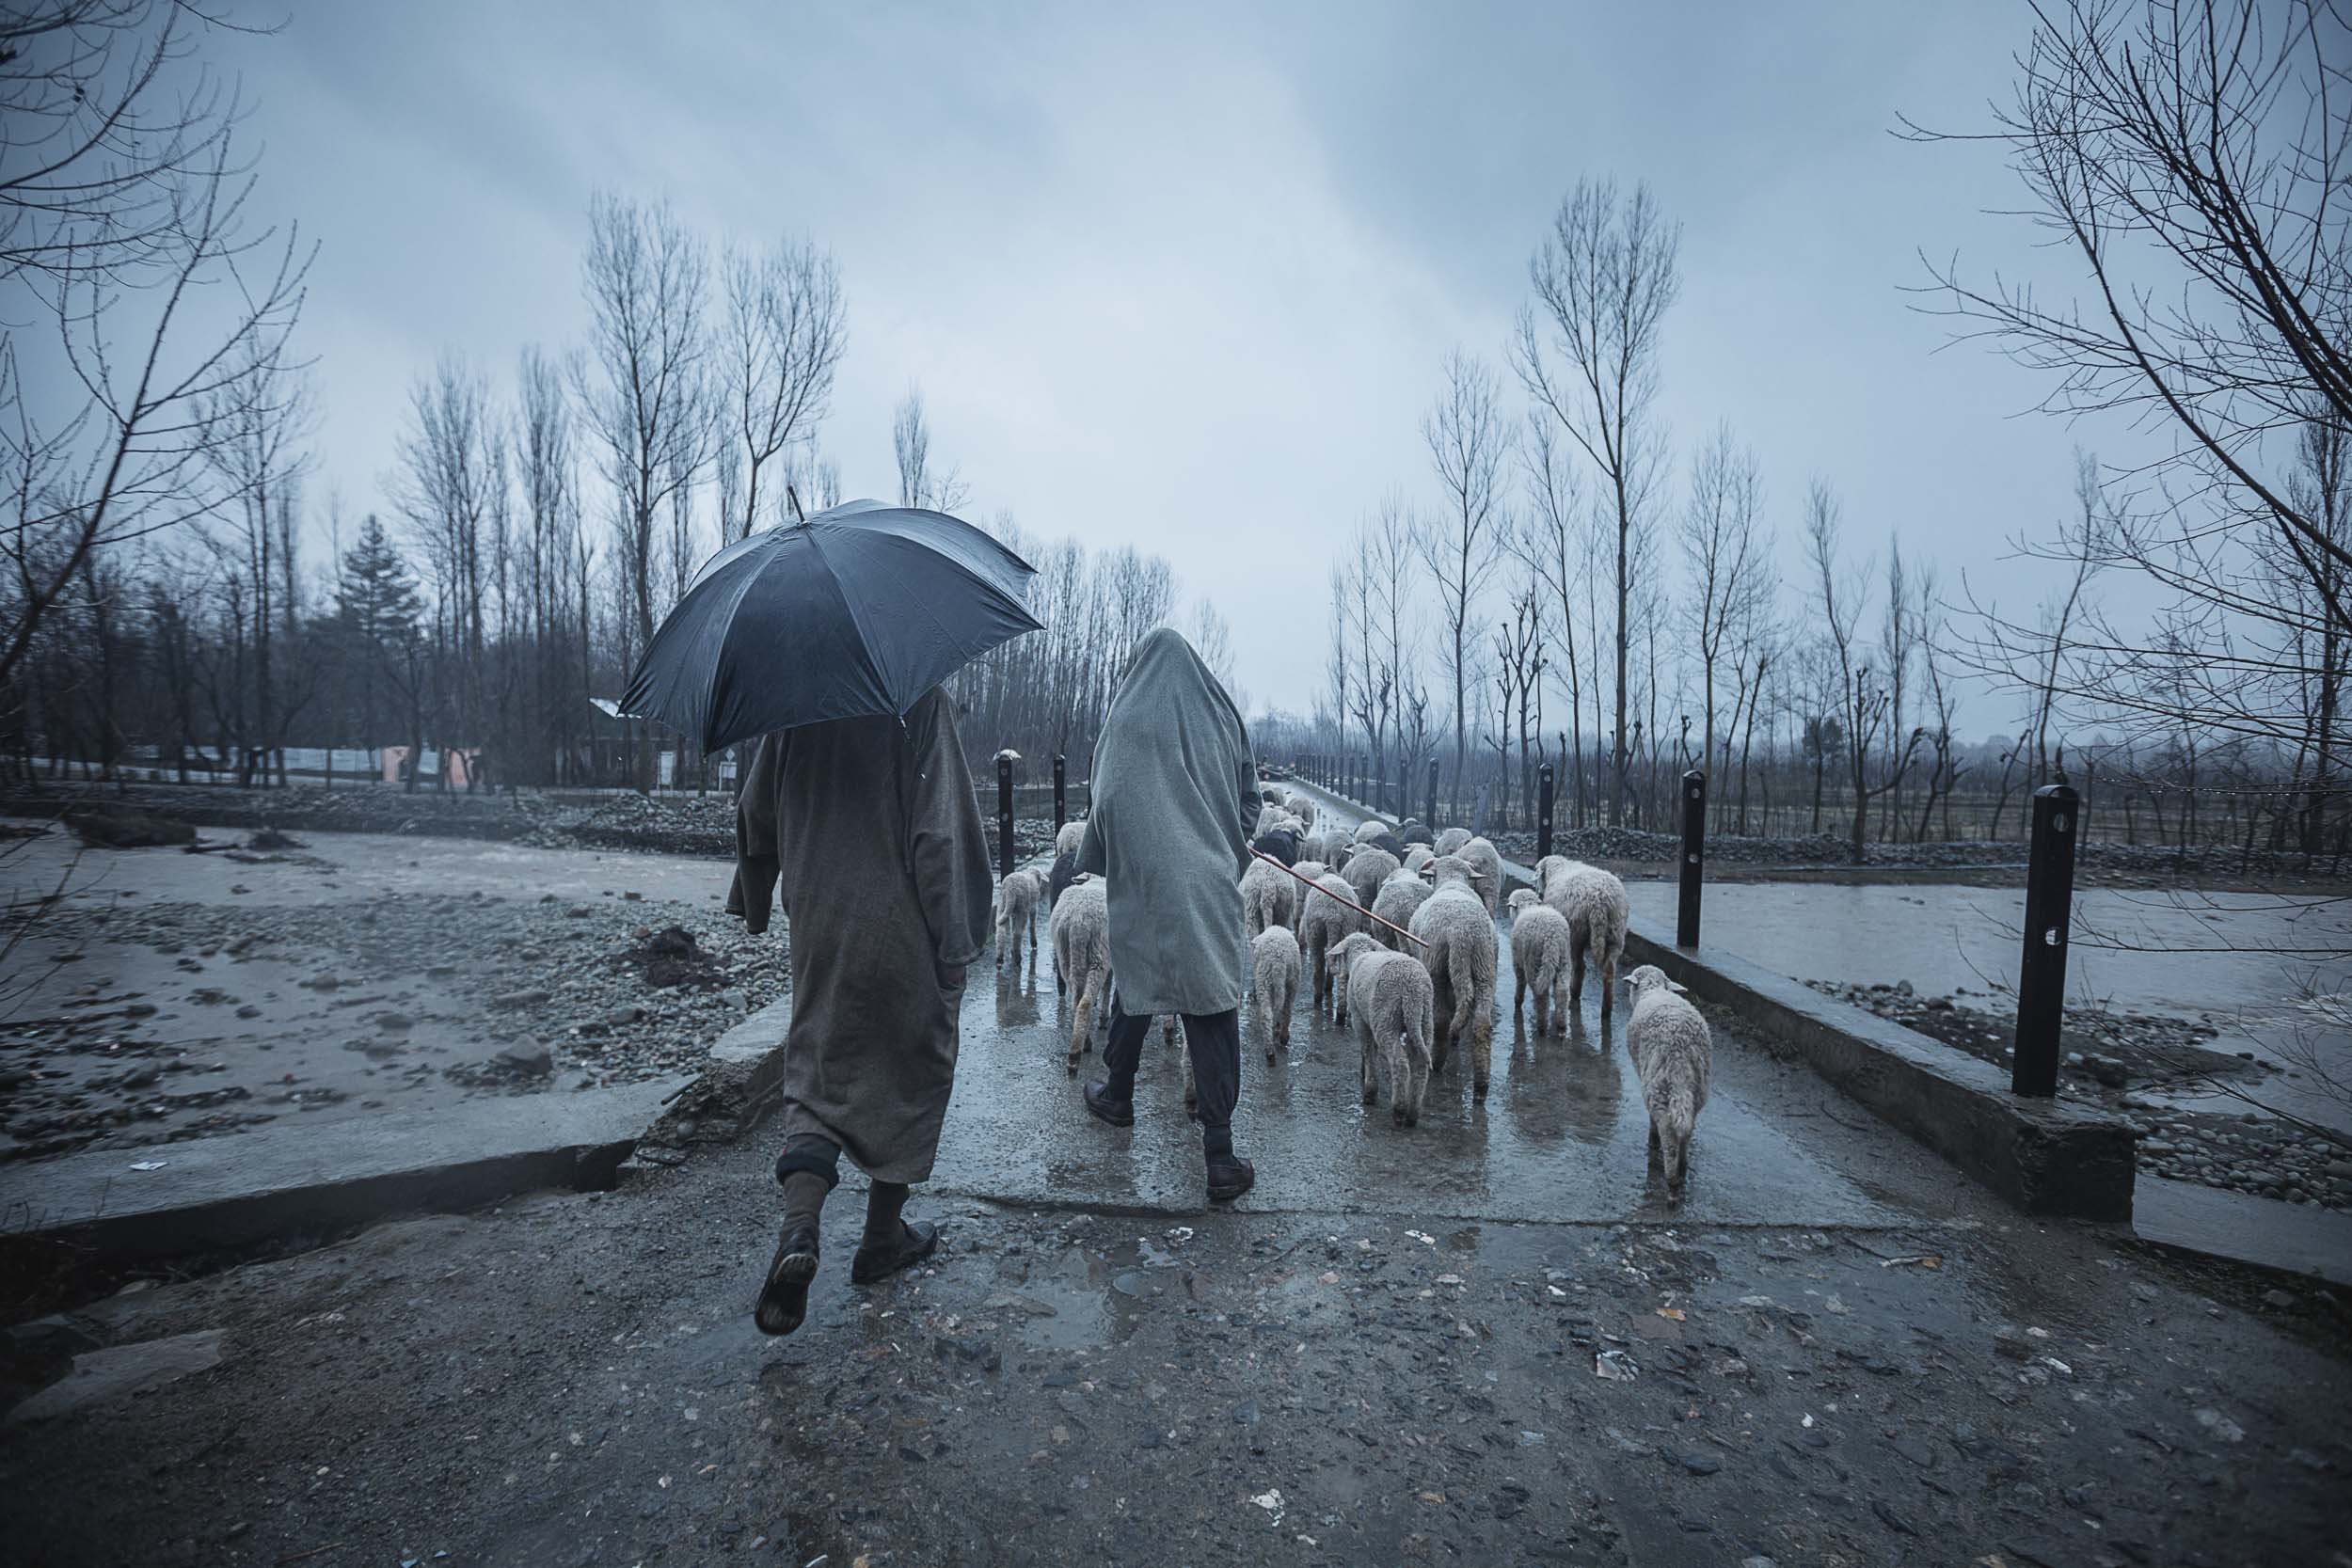 Sindhur_Photography_Travel_Nature_Kashmir-13.JPG